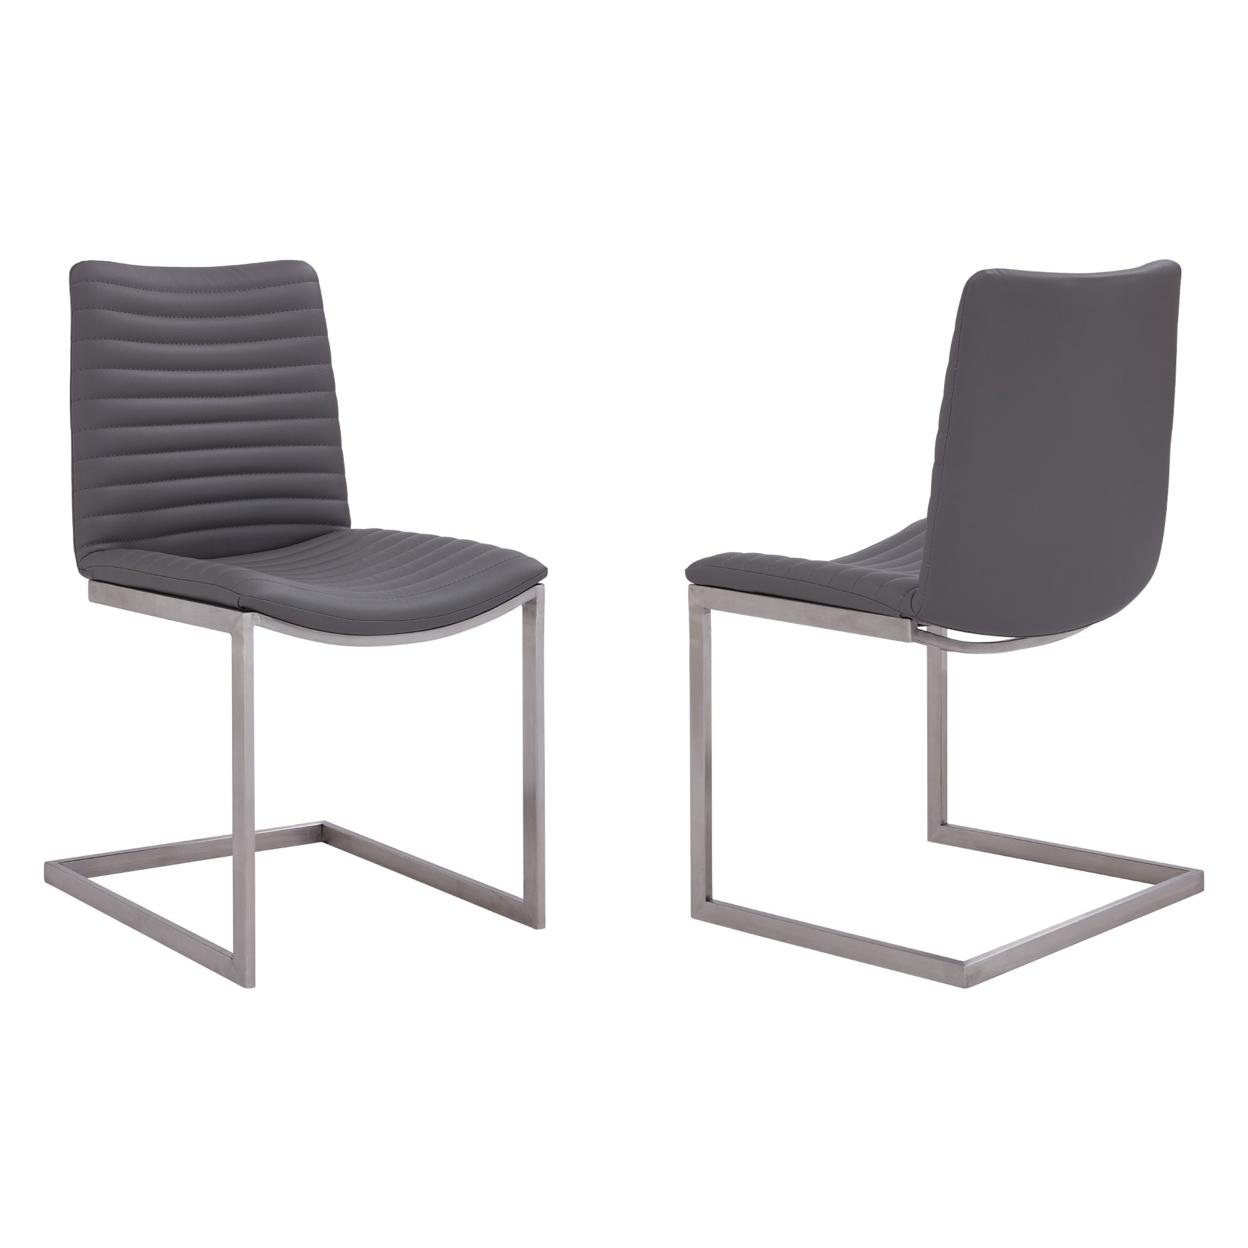 Horizontally Stitched Leatherette Side Chair, Set Of 2, Gray- Saltoro Sherpi